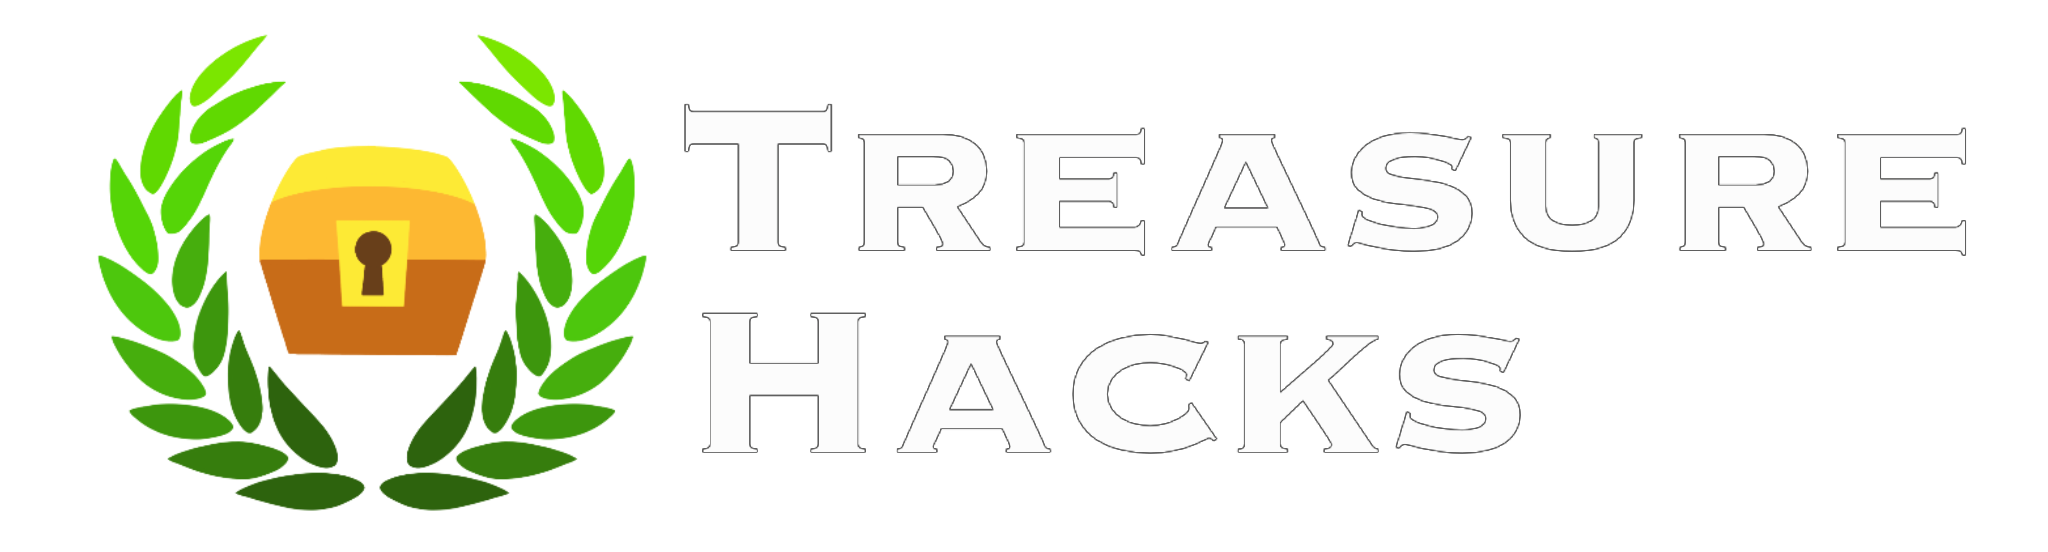 Treasure Hacks Logo